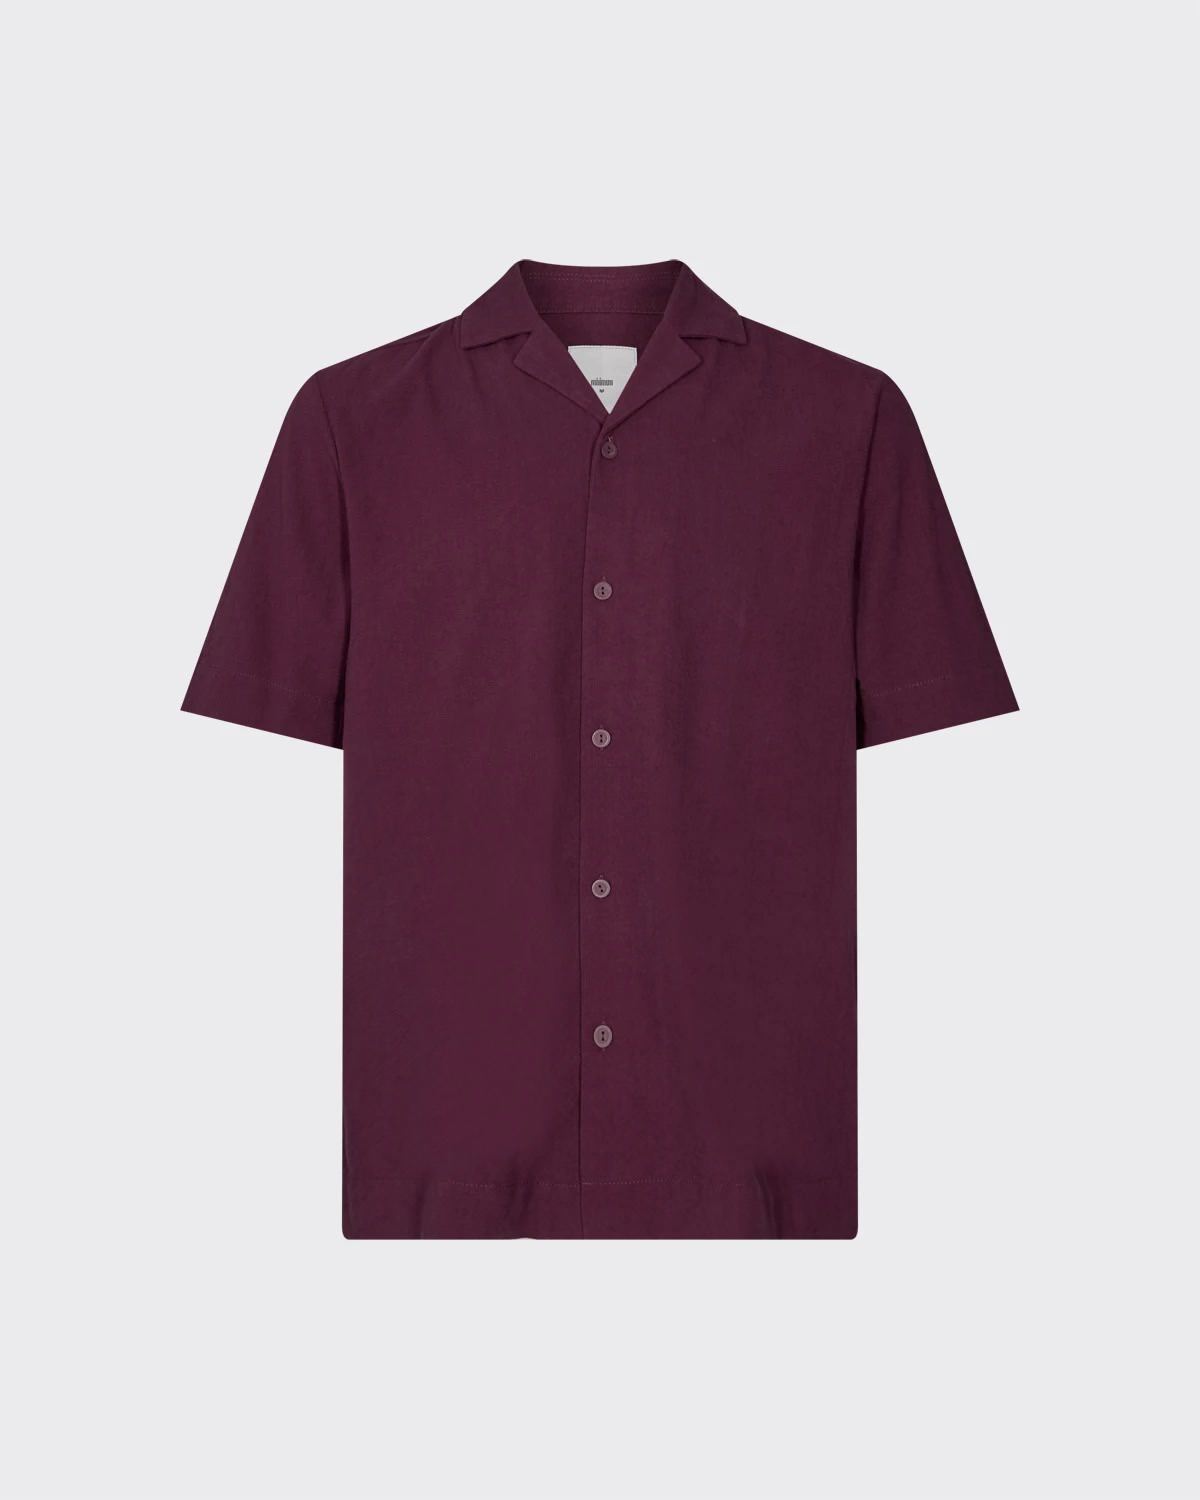 Femlig 8092 Short Sleeved Shirt